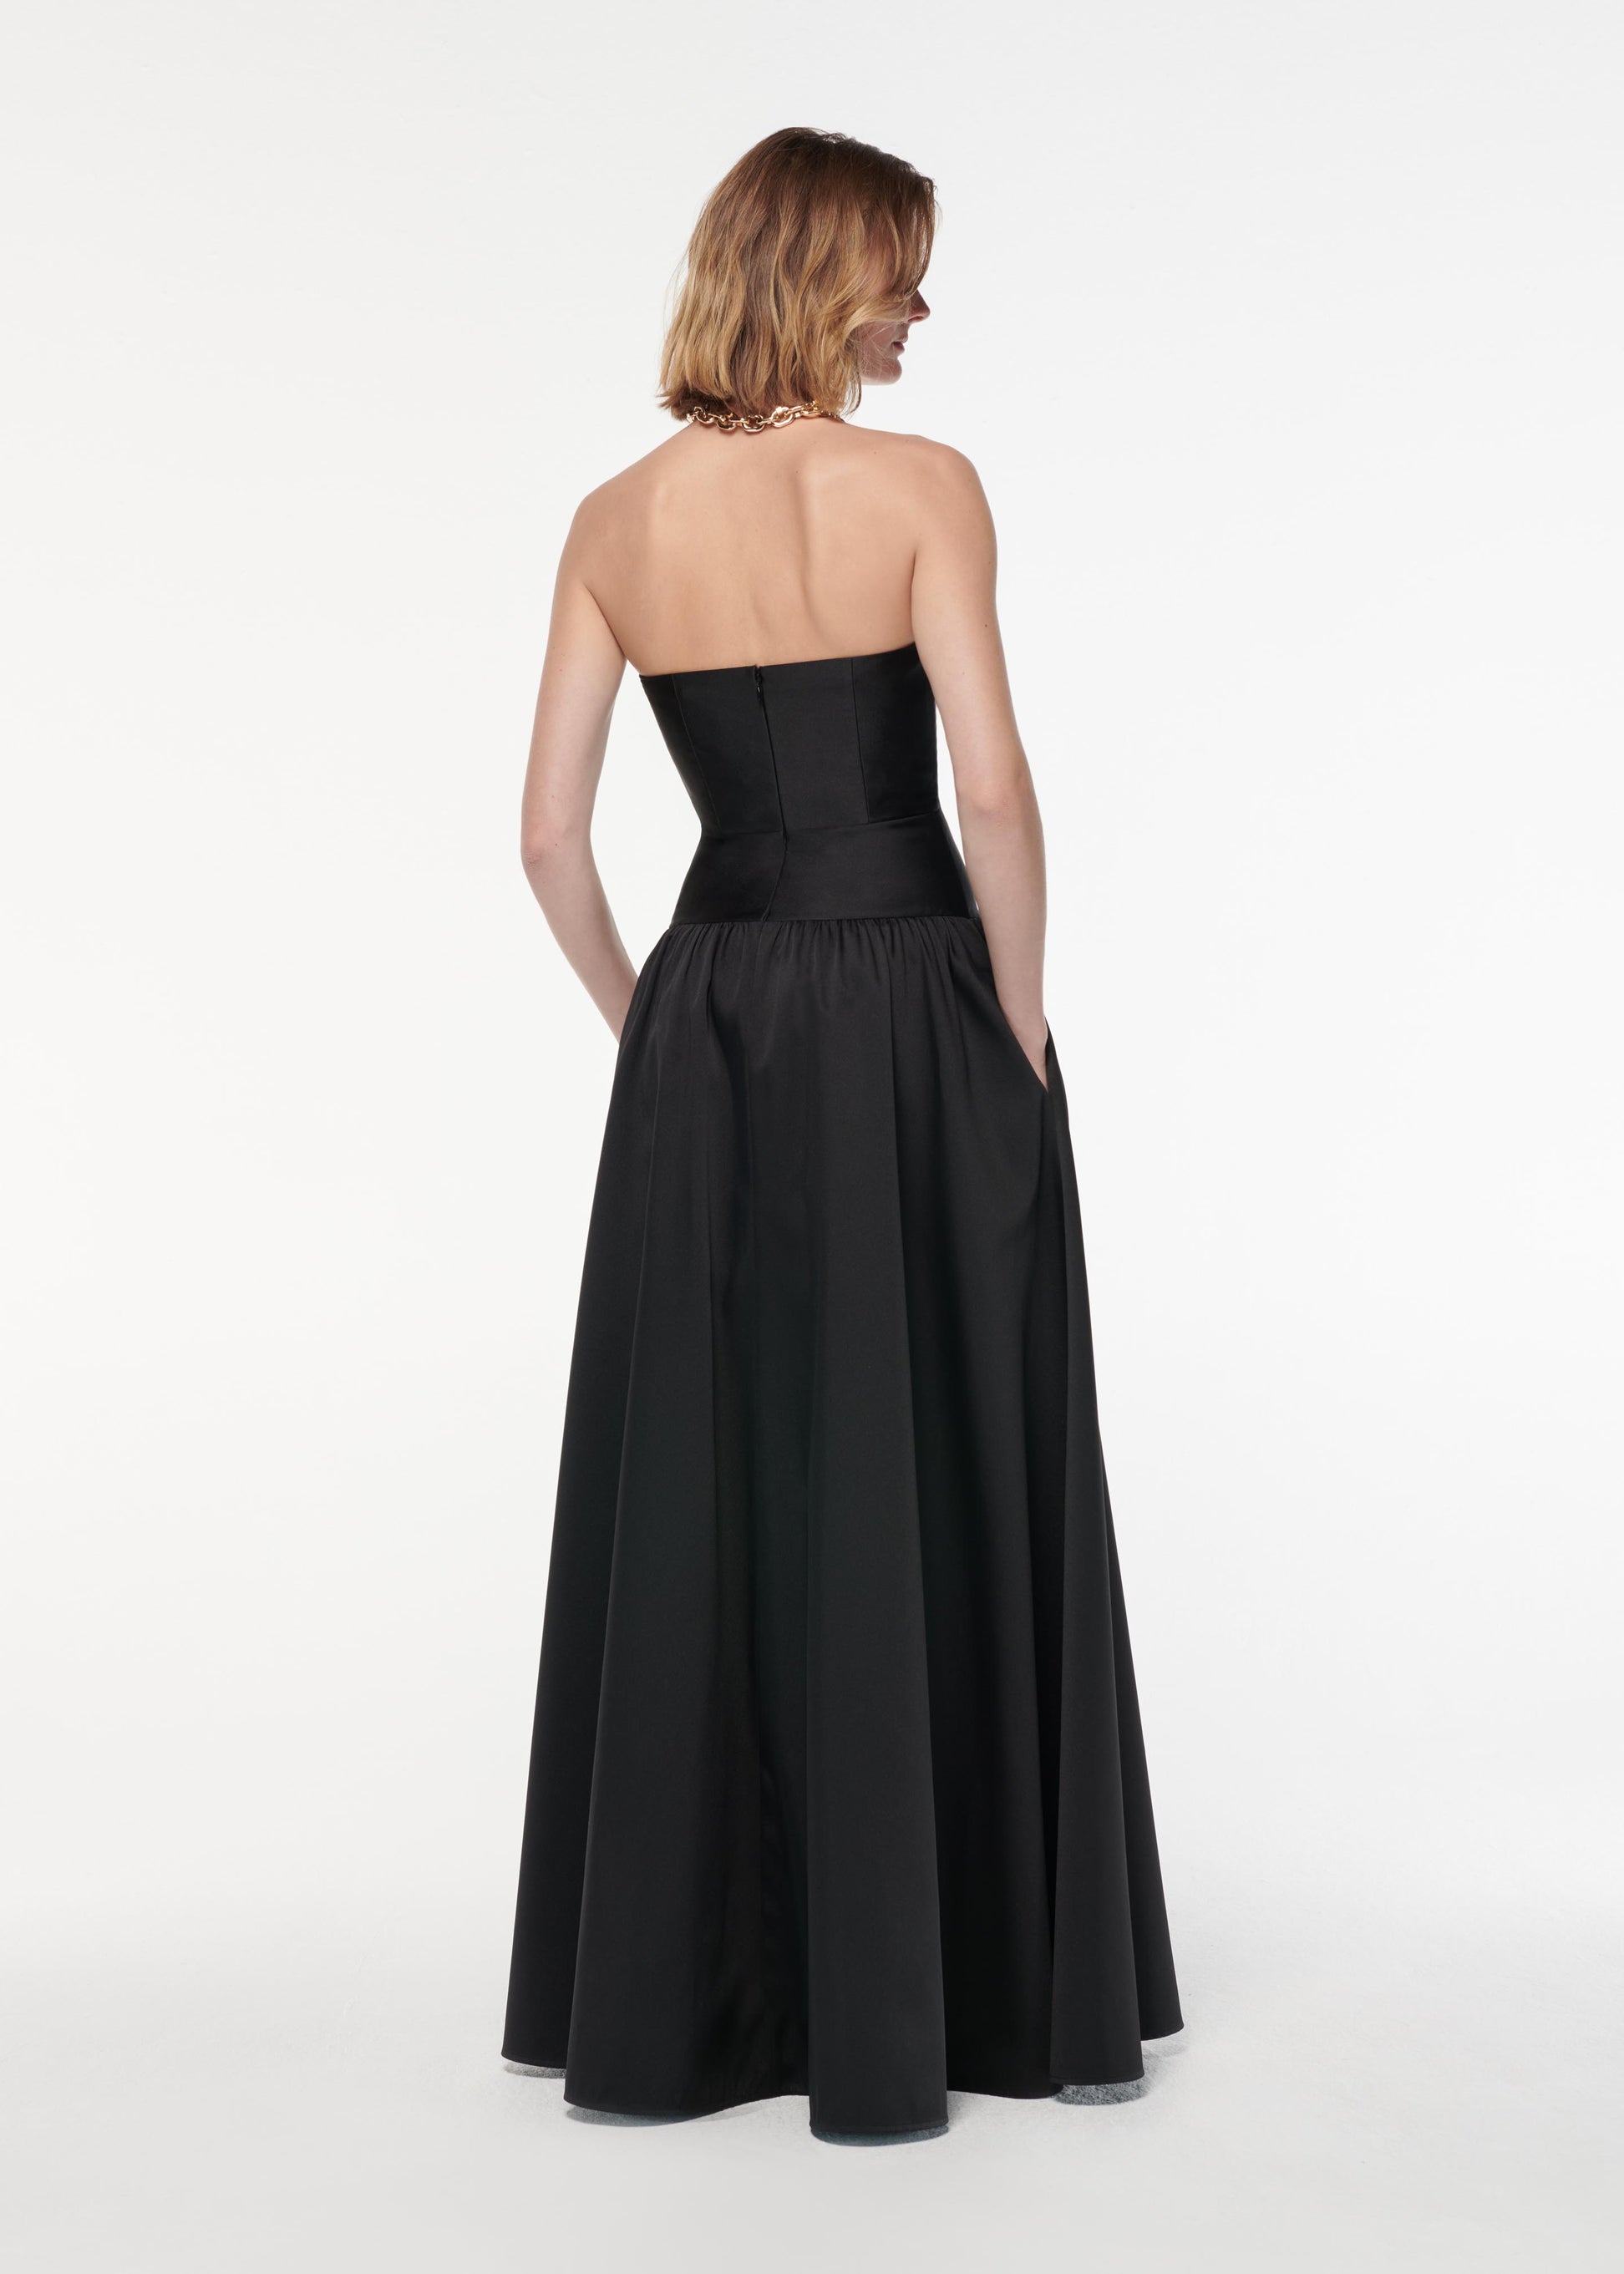 Strapless Taffeta Gown in Black – Roland Mouret